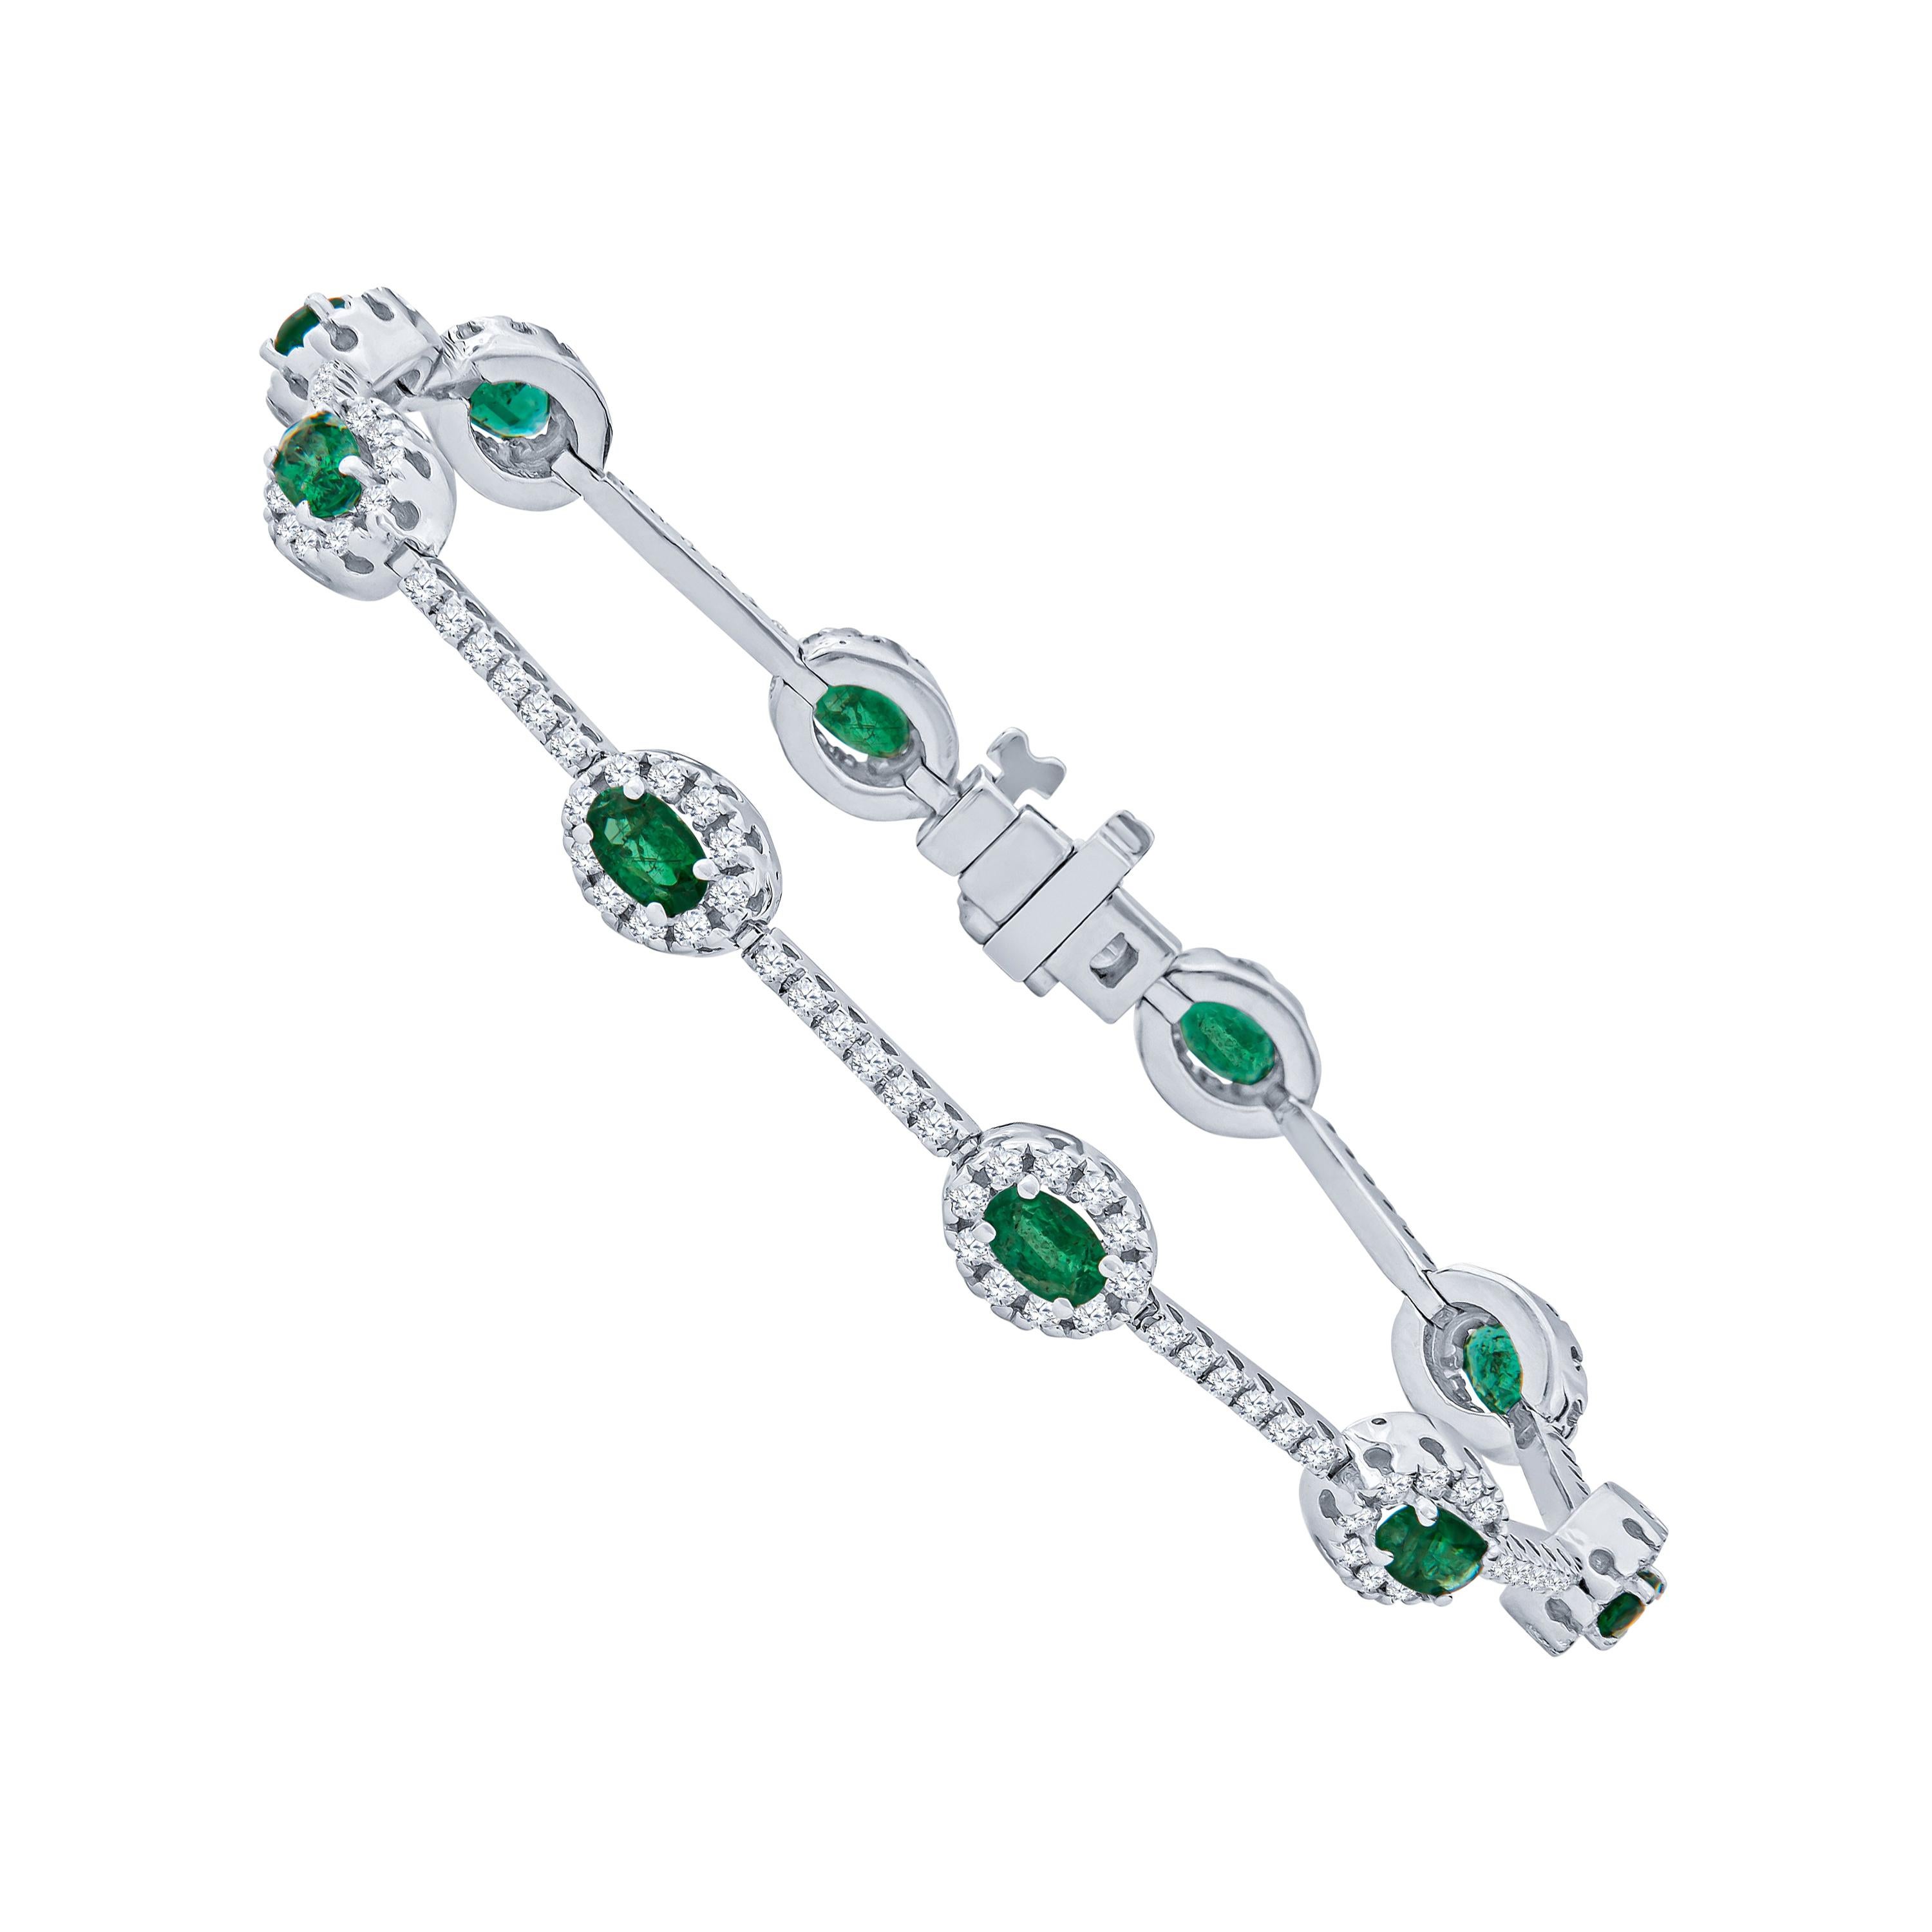 2.20 Carat Oval Emerald and 1.37 Carat Diamond Bracelet in 14 Karat Gold